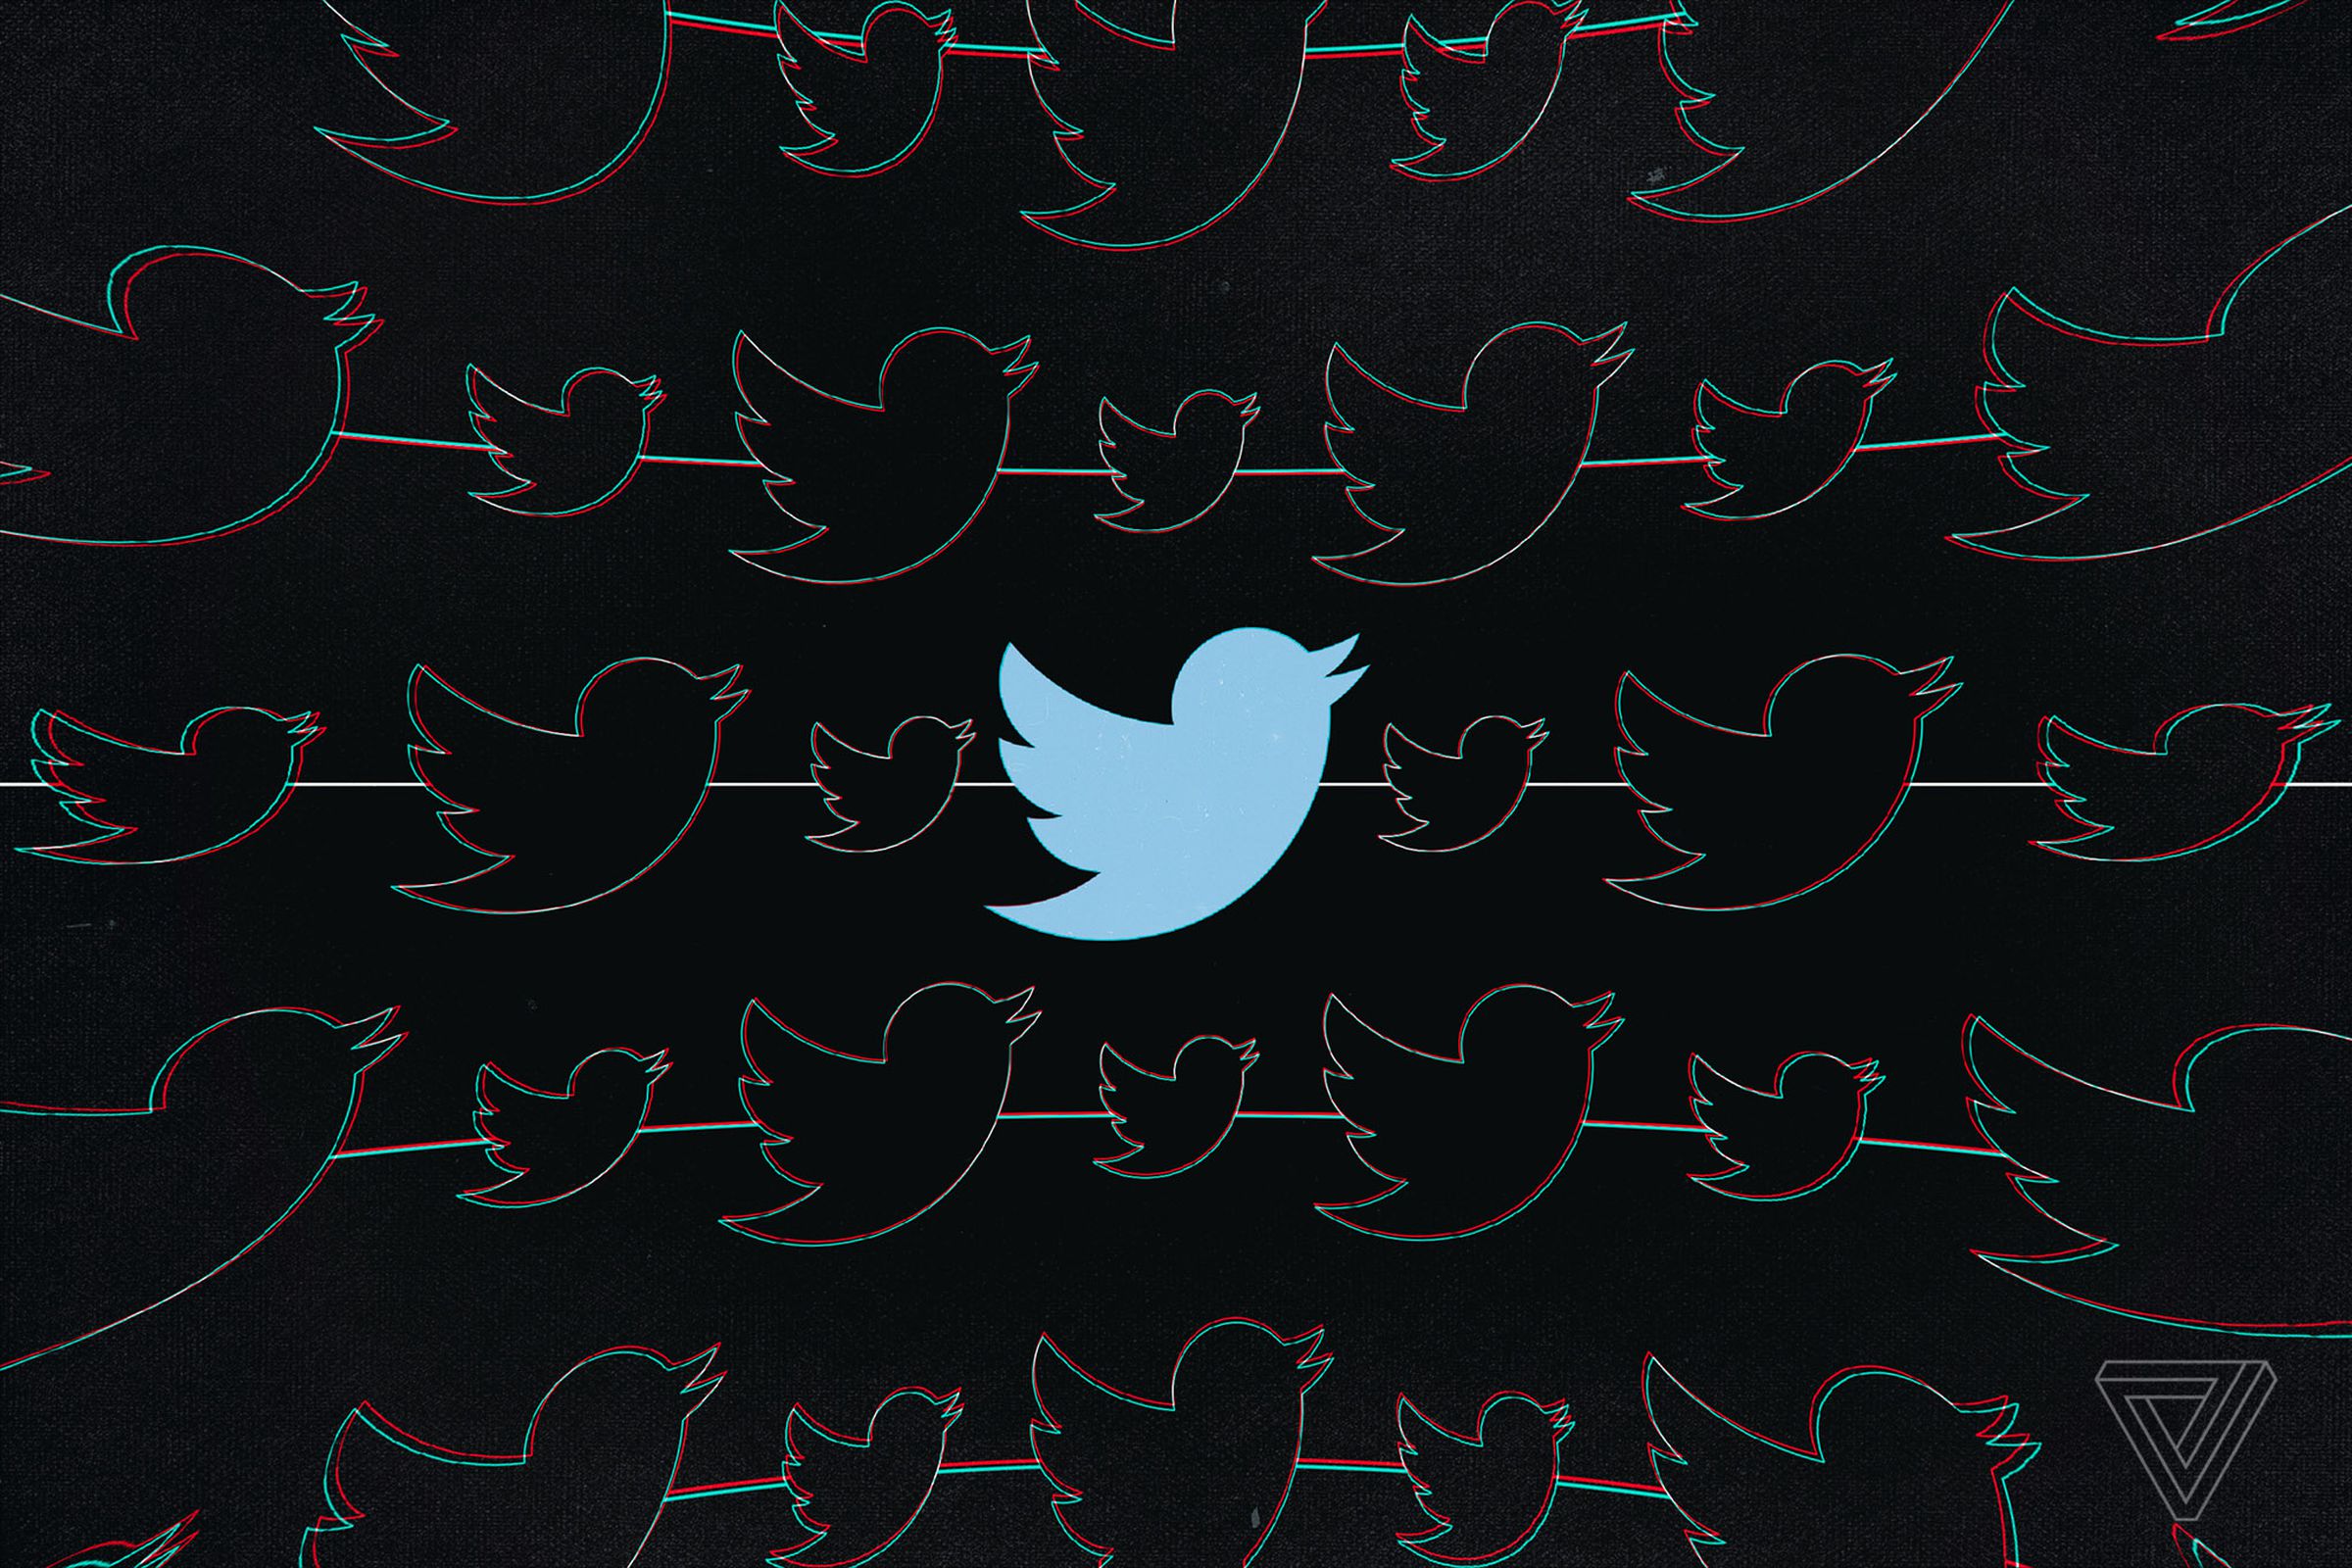 Twitter’s blue bird silhouette logo is seen on a black background.